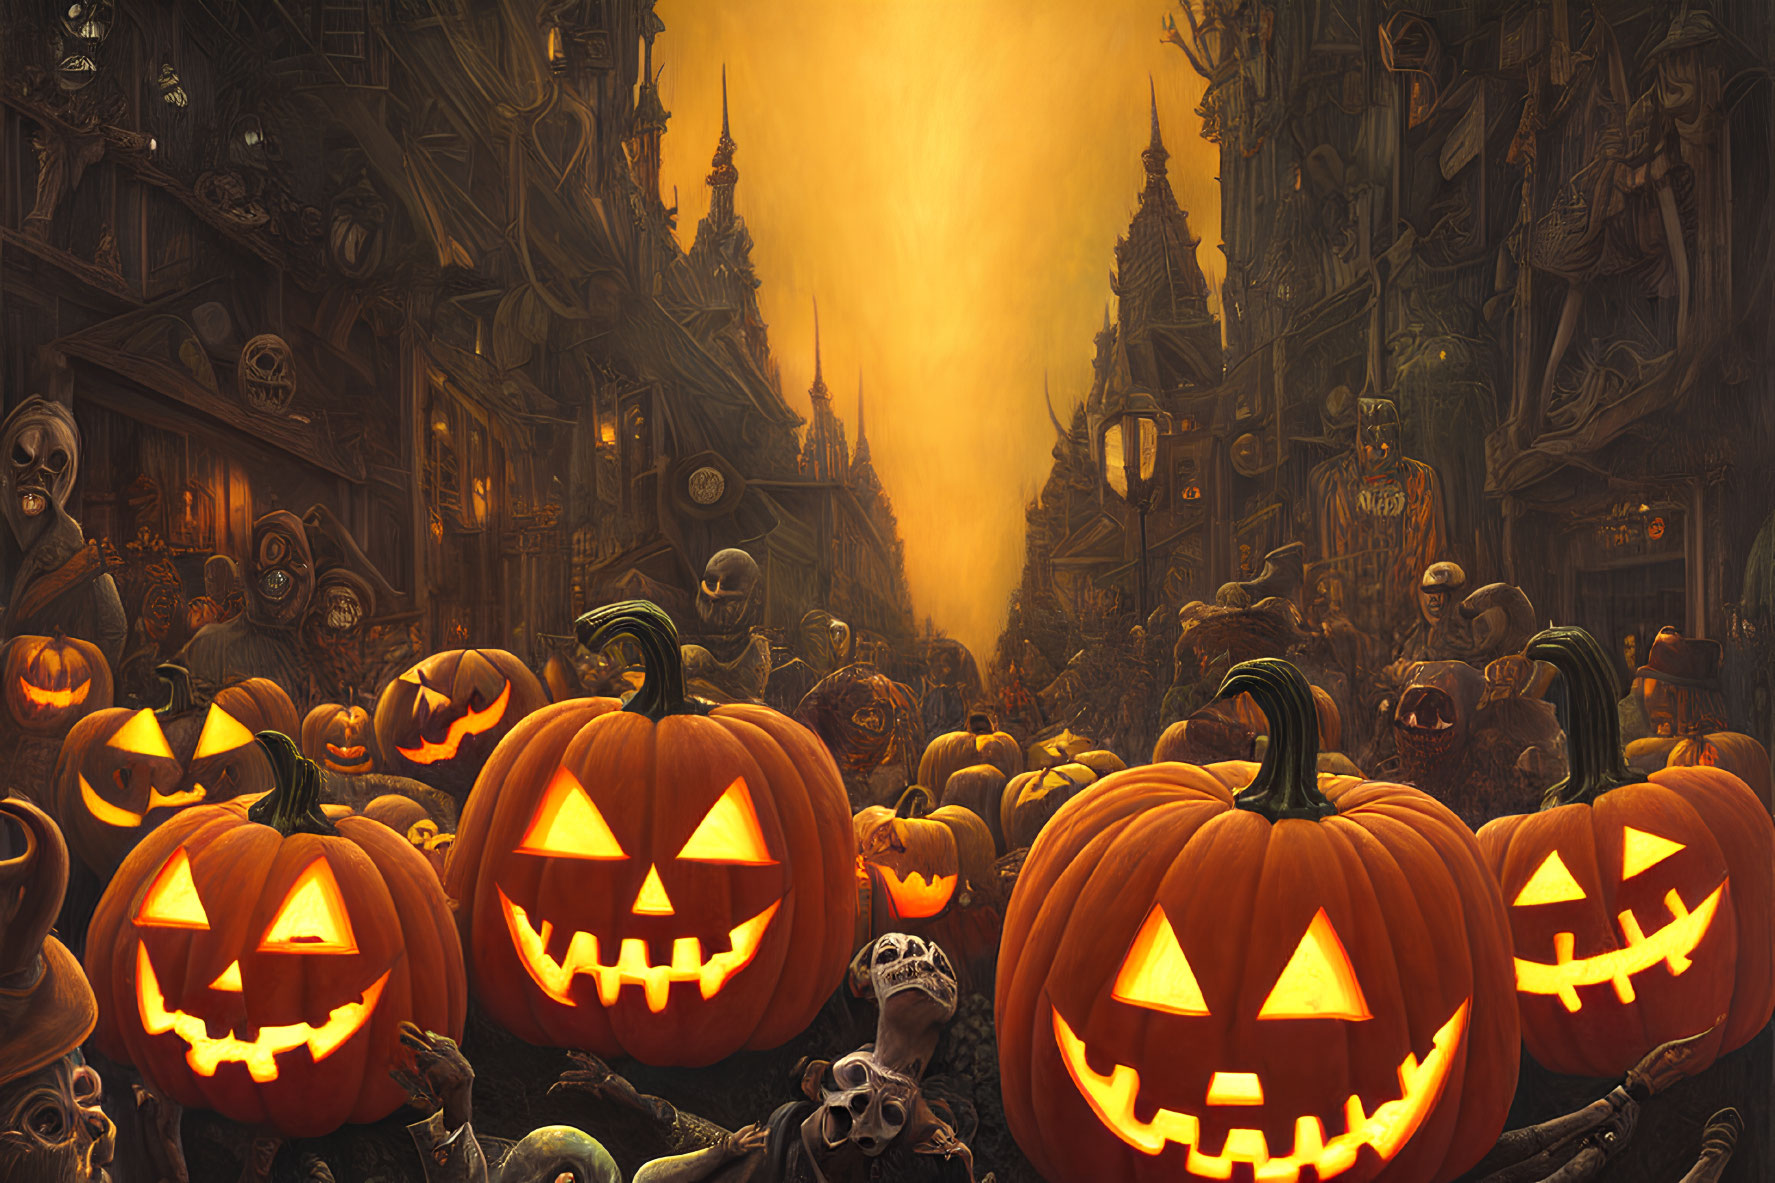 Halloween-themed image: Carved pumpkins, skeletons, spooky street